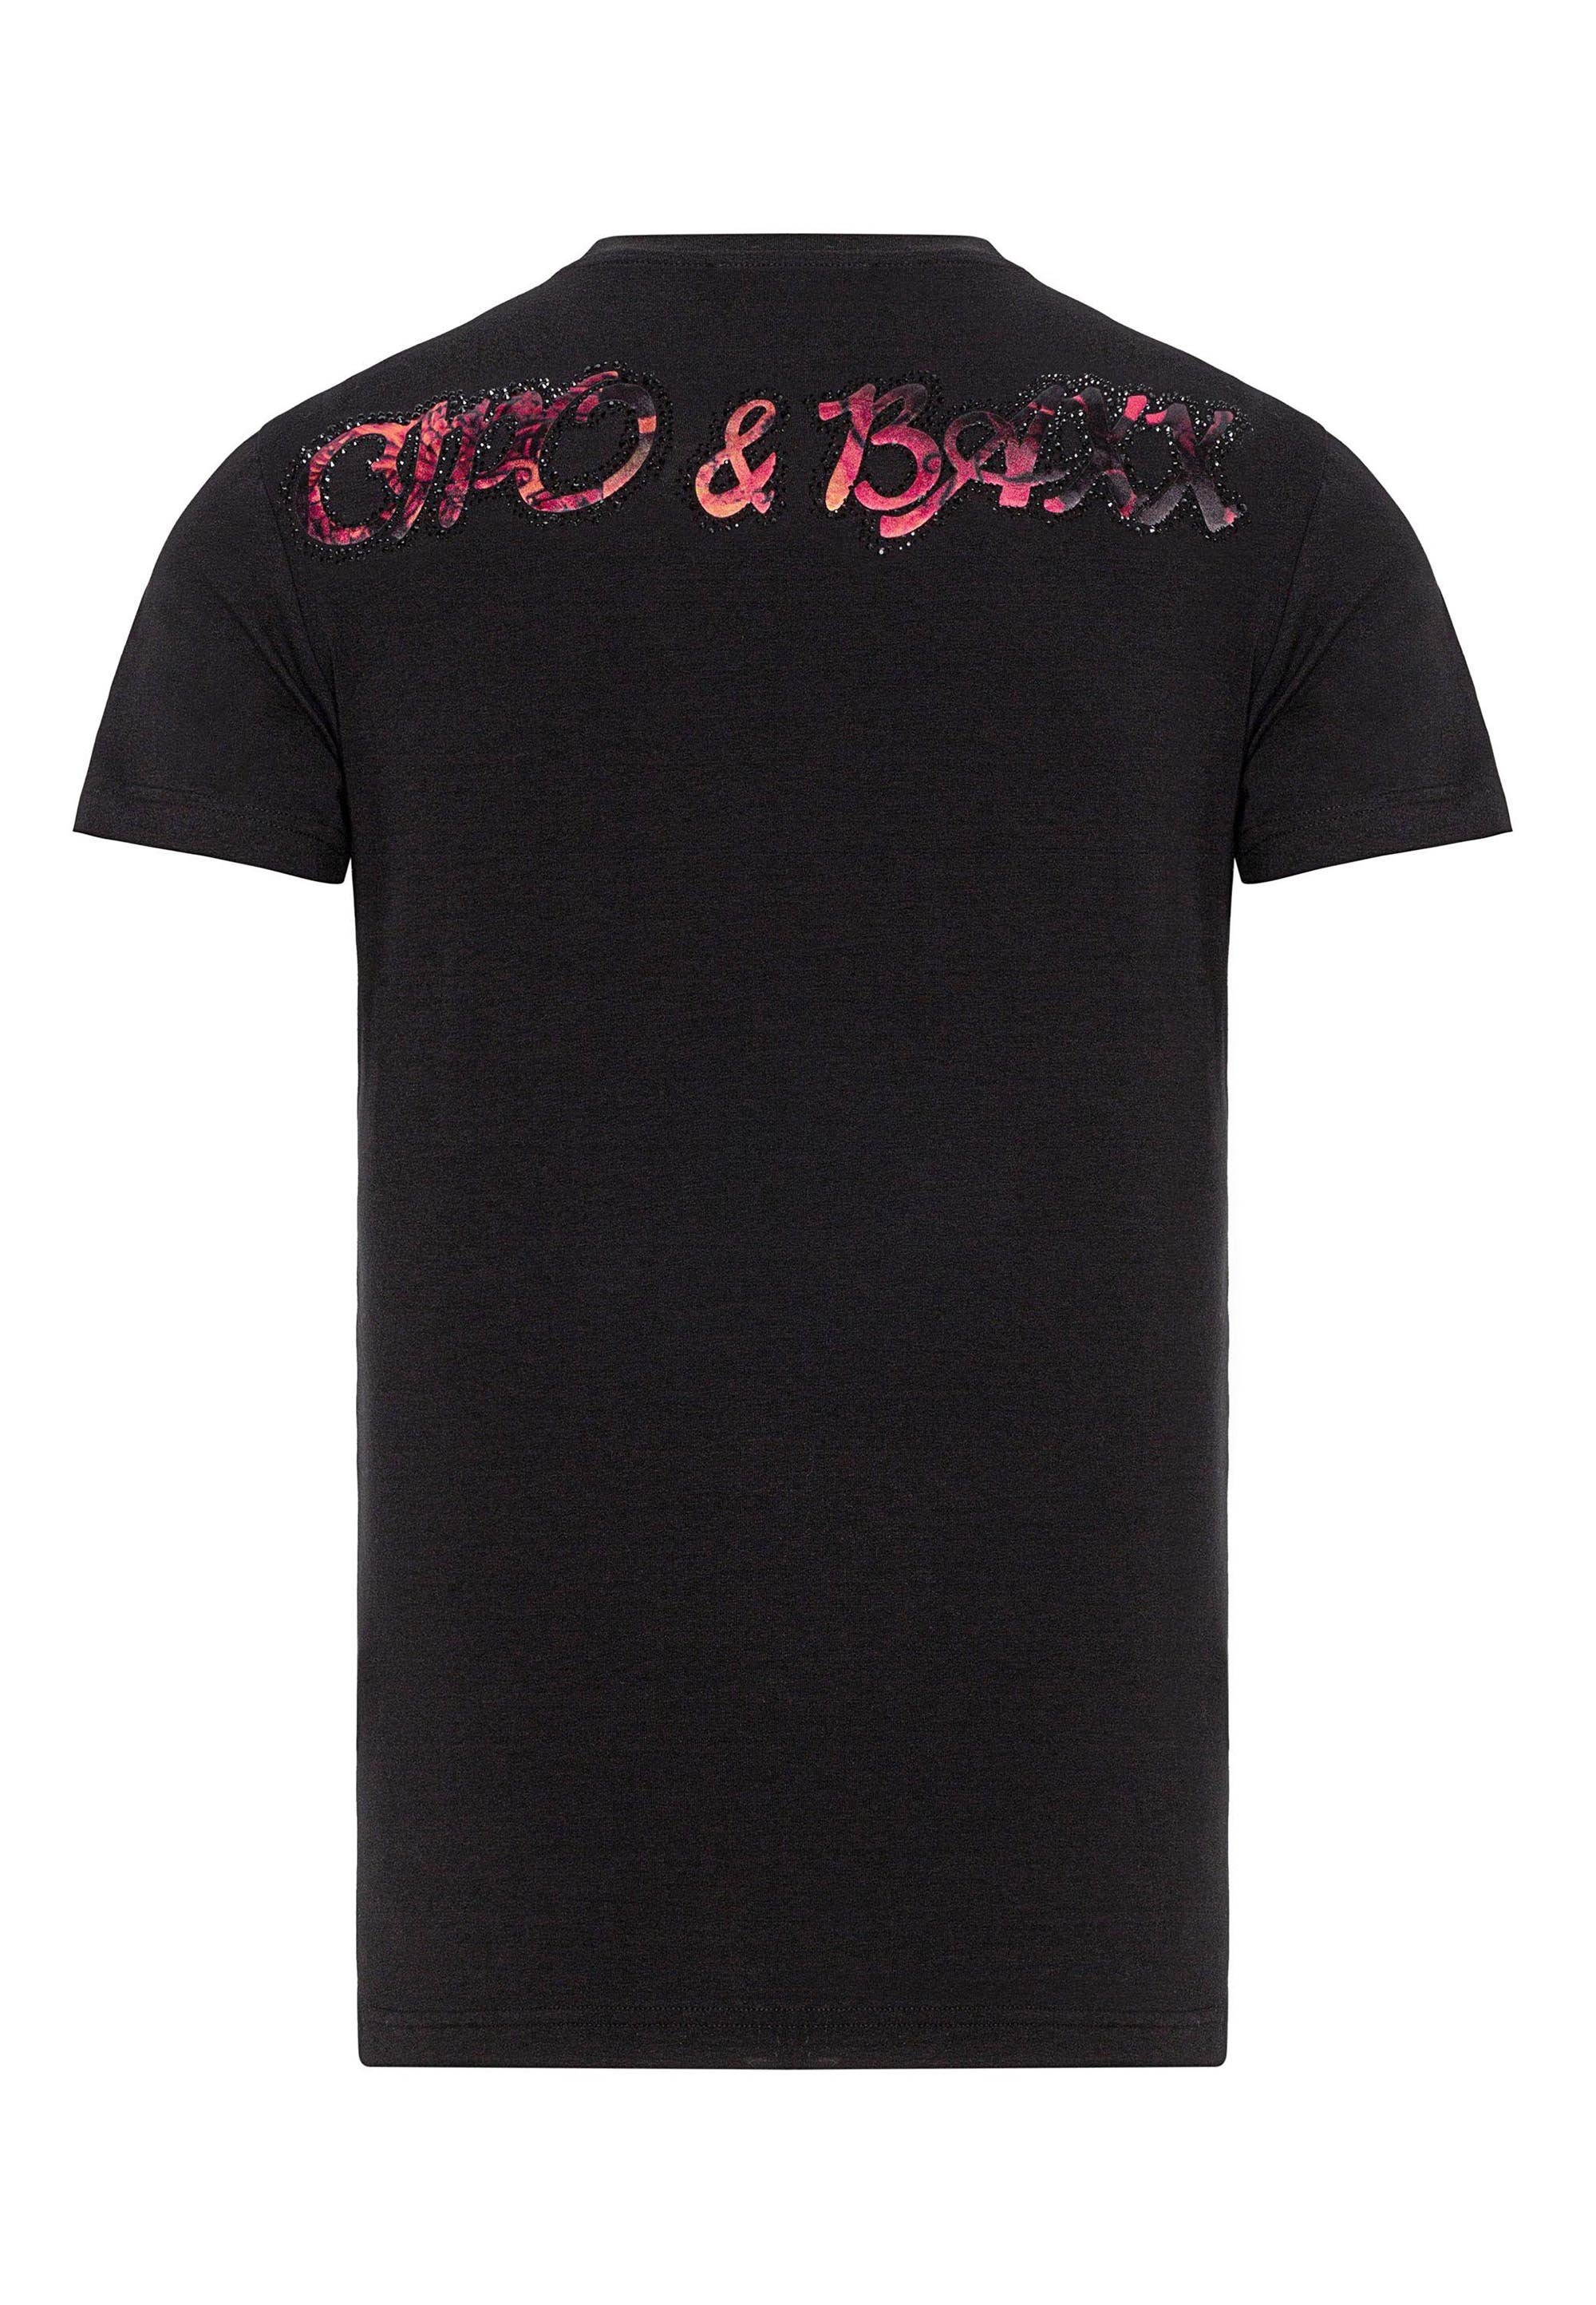 Frontprint & T-Shirt großem mit Baxx Cipo